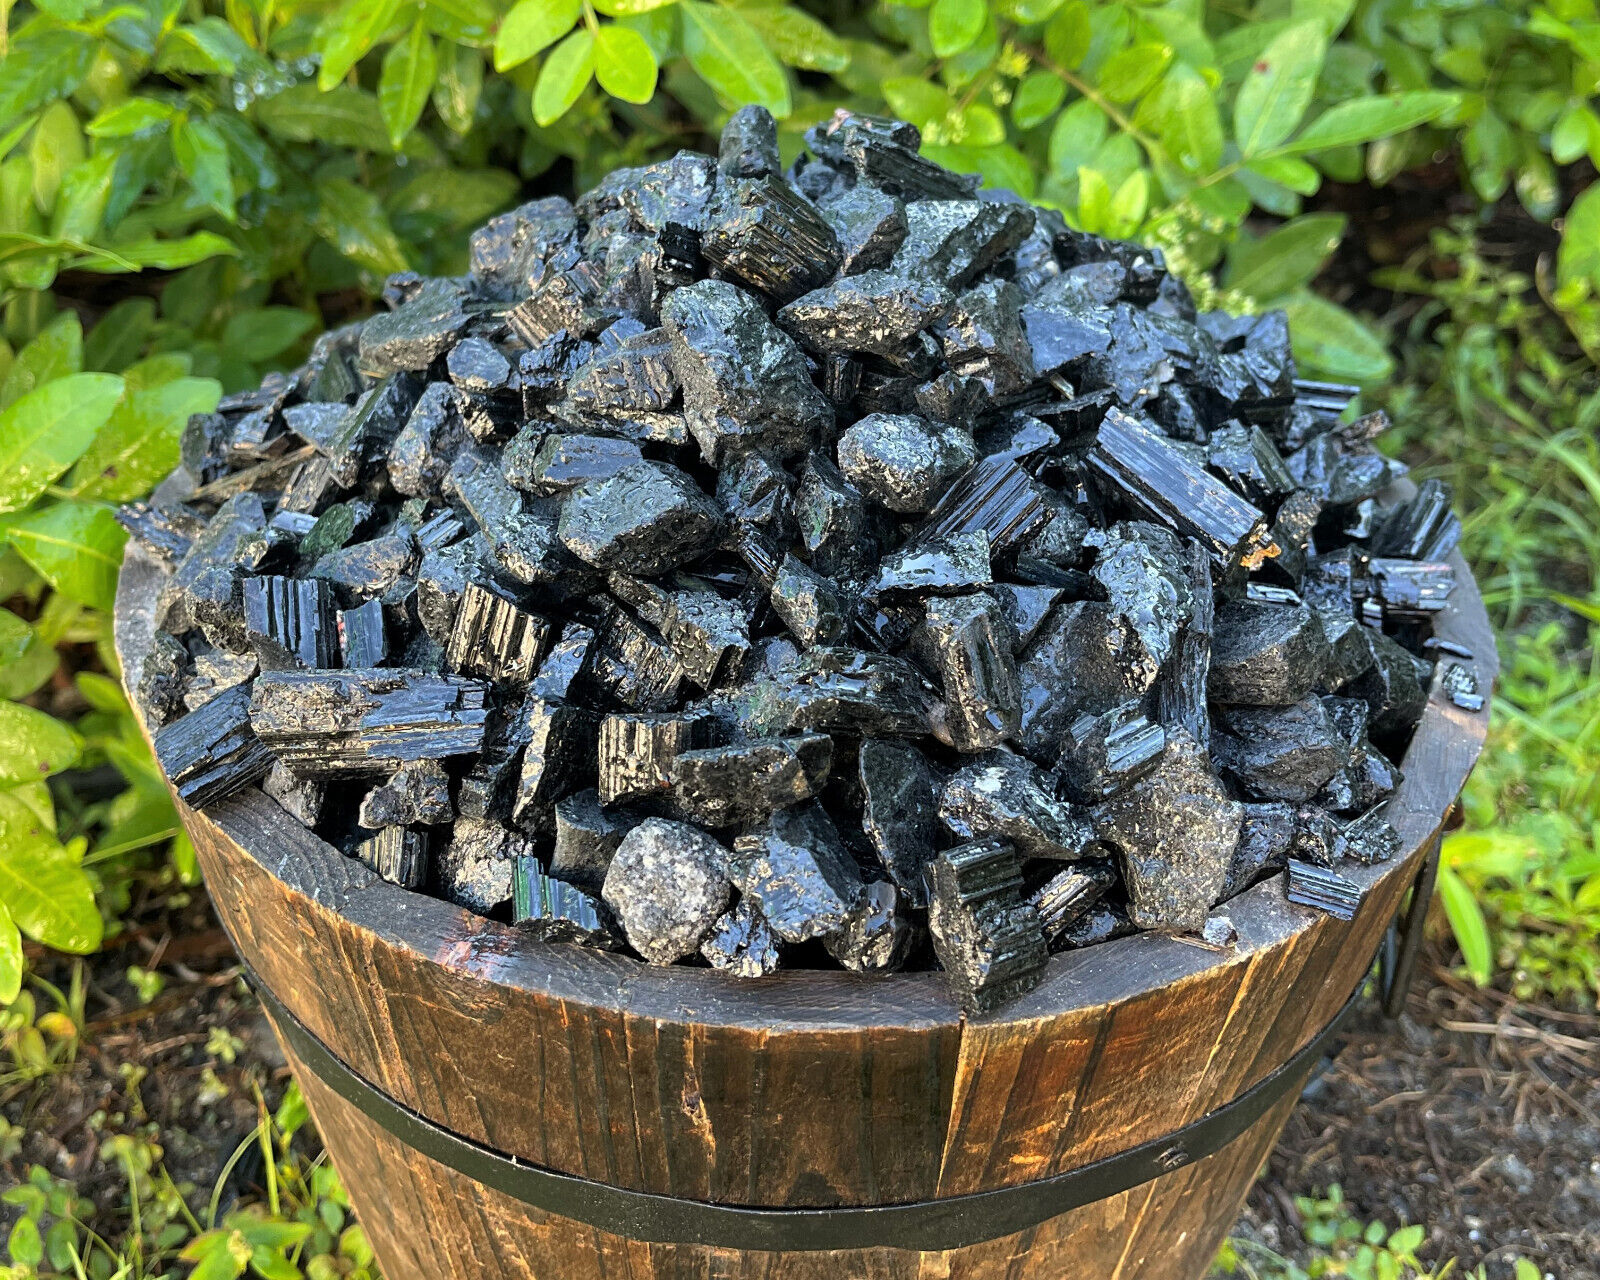 Black Tourmaline Rough Natural Stones CLEARANCE Wholesale lots - Raw Tourmaline